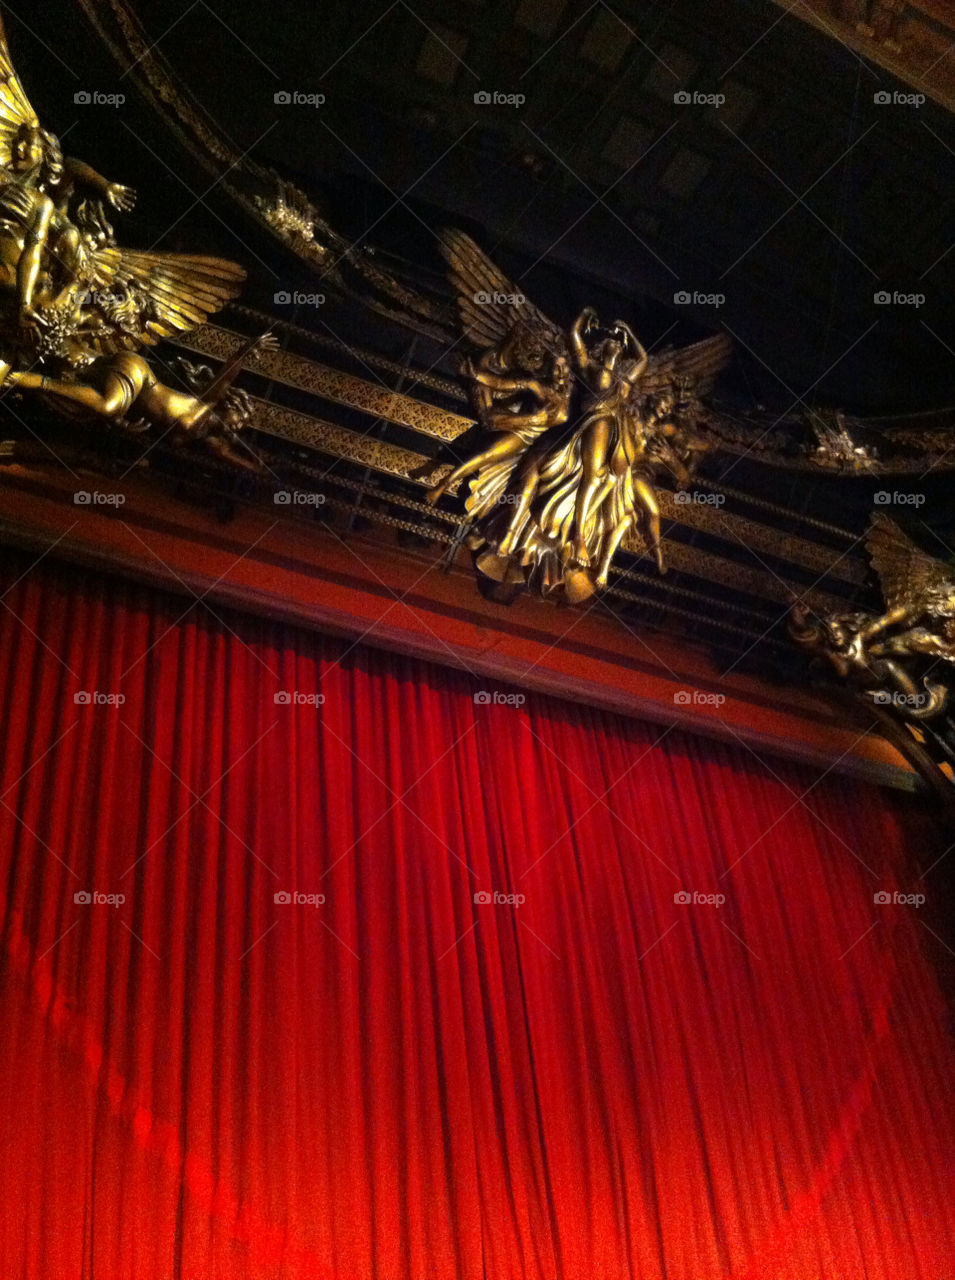 Her majestic theatre. London November 2012.